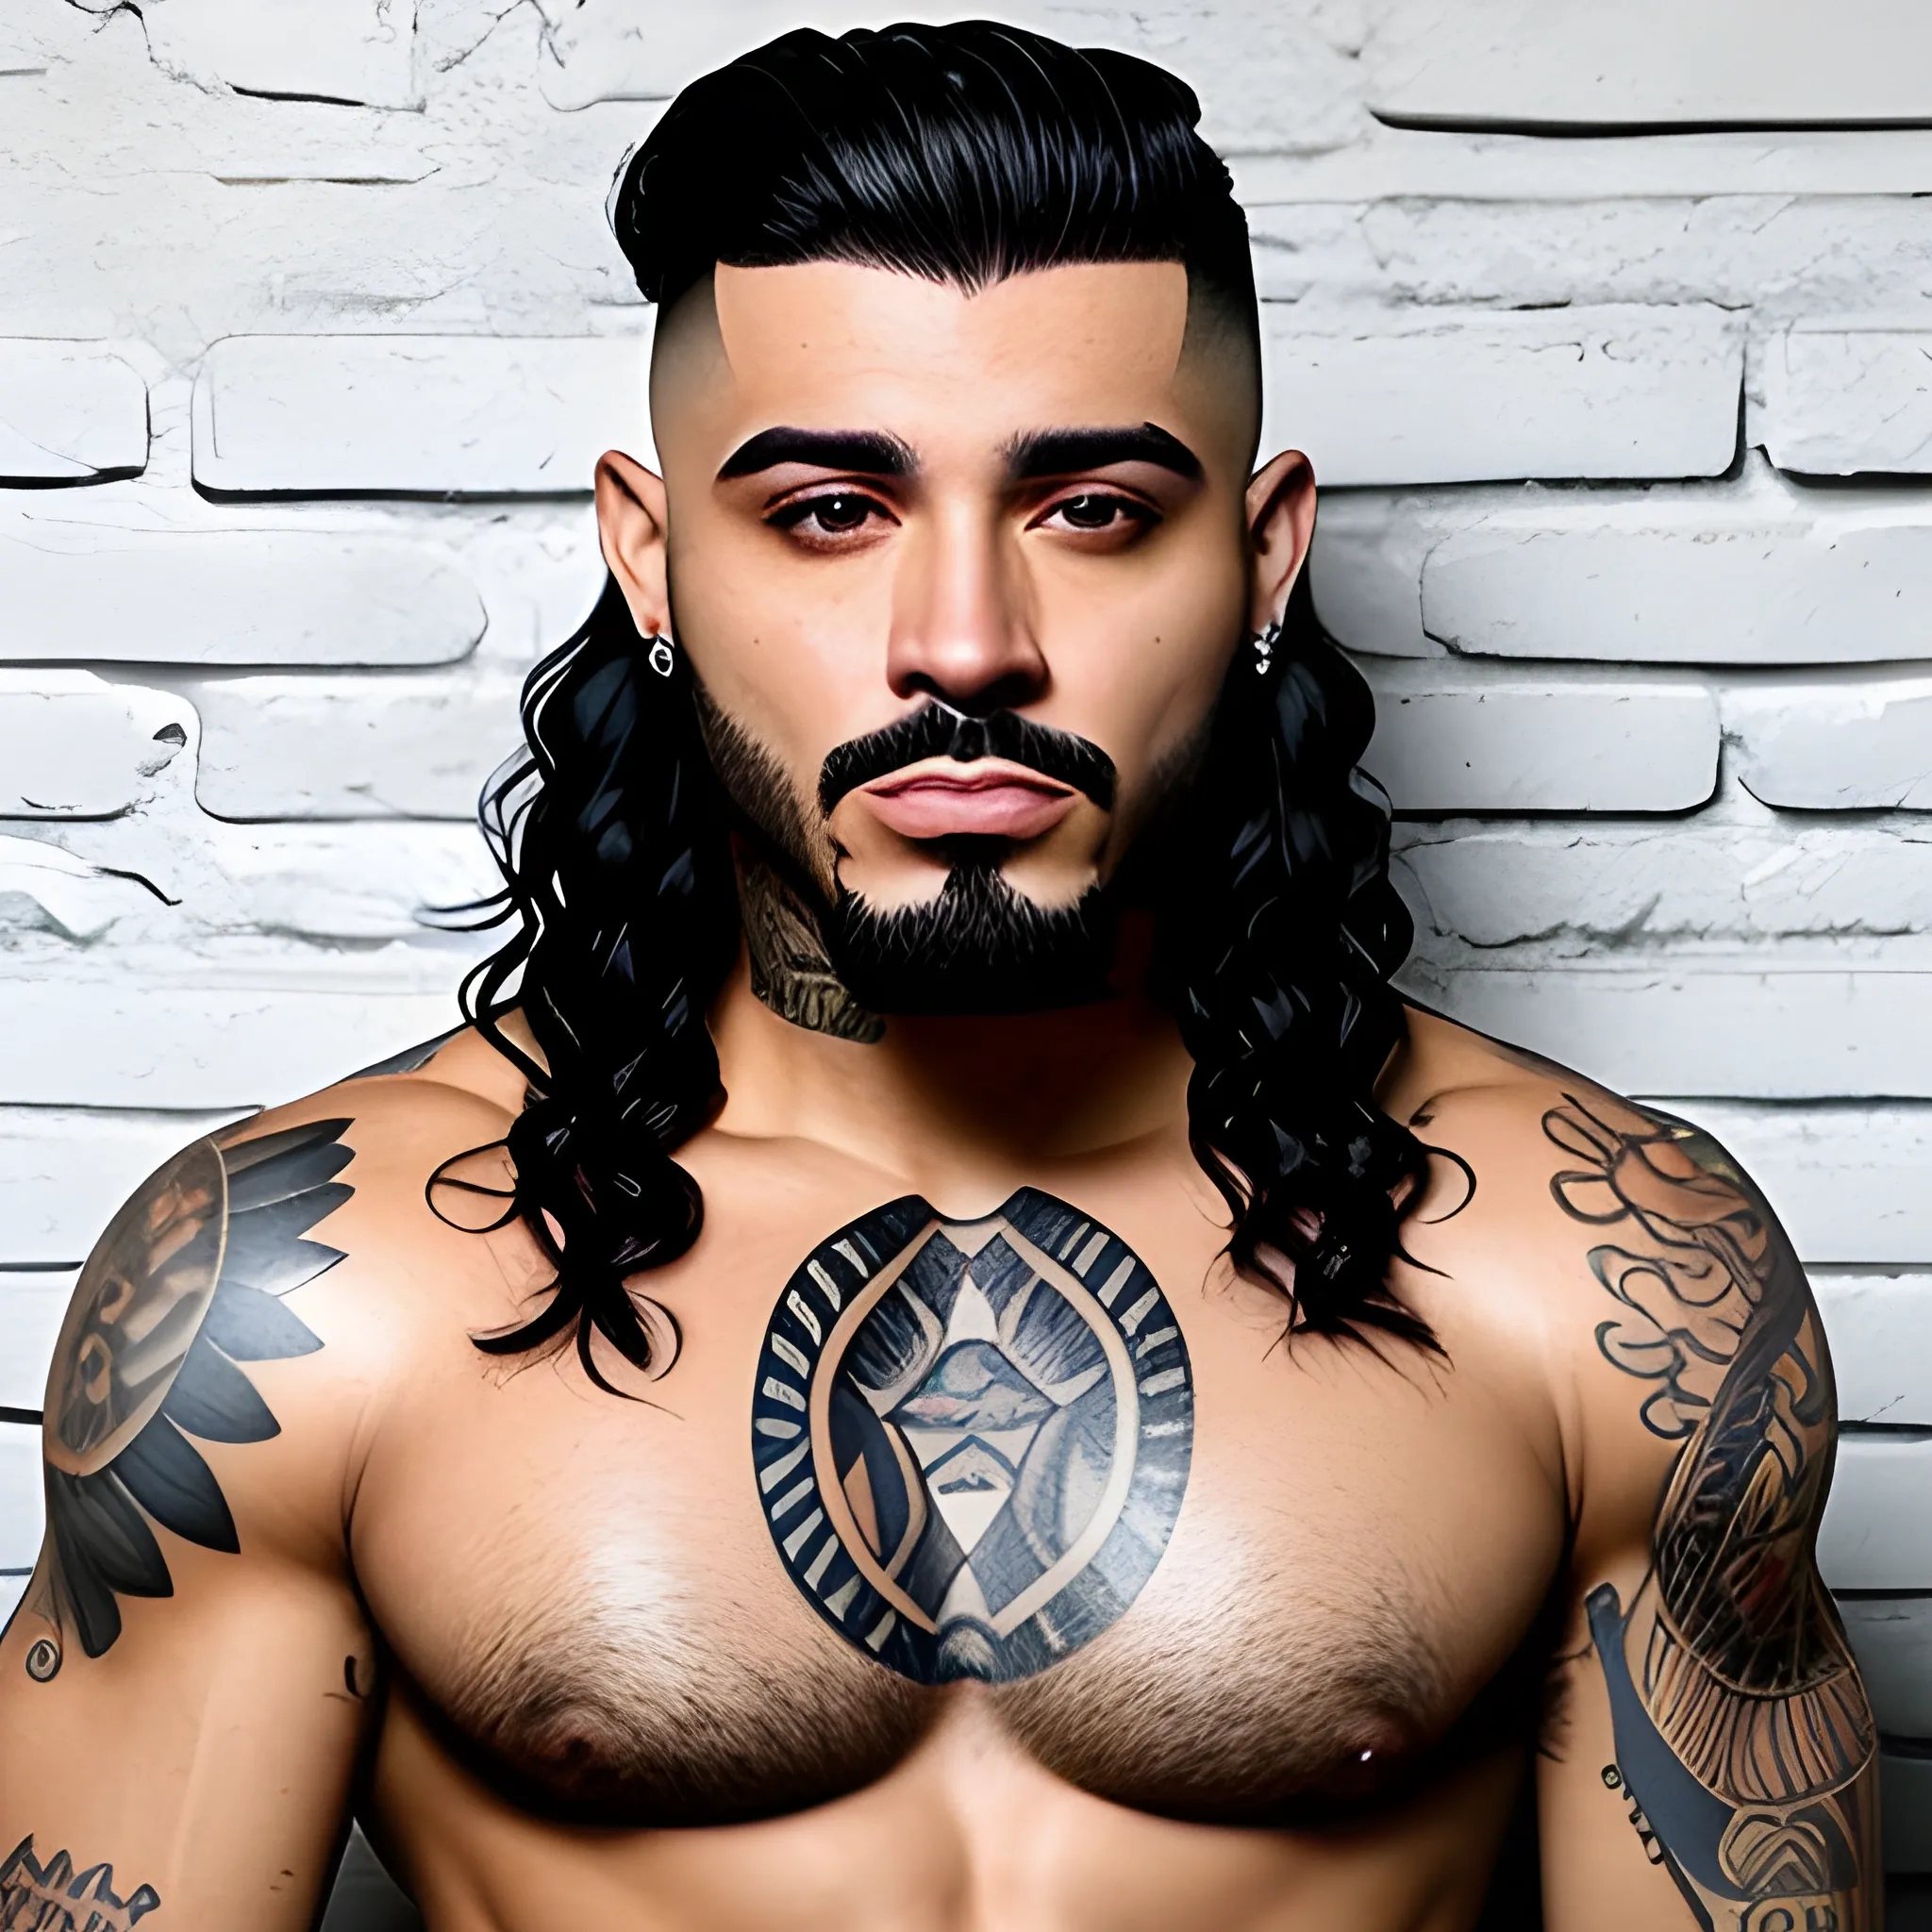 Latin colombian young man hair face tatto trap rap serio